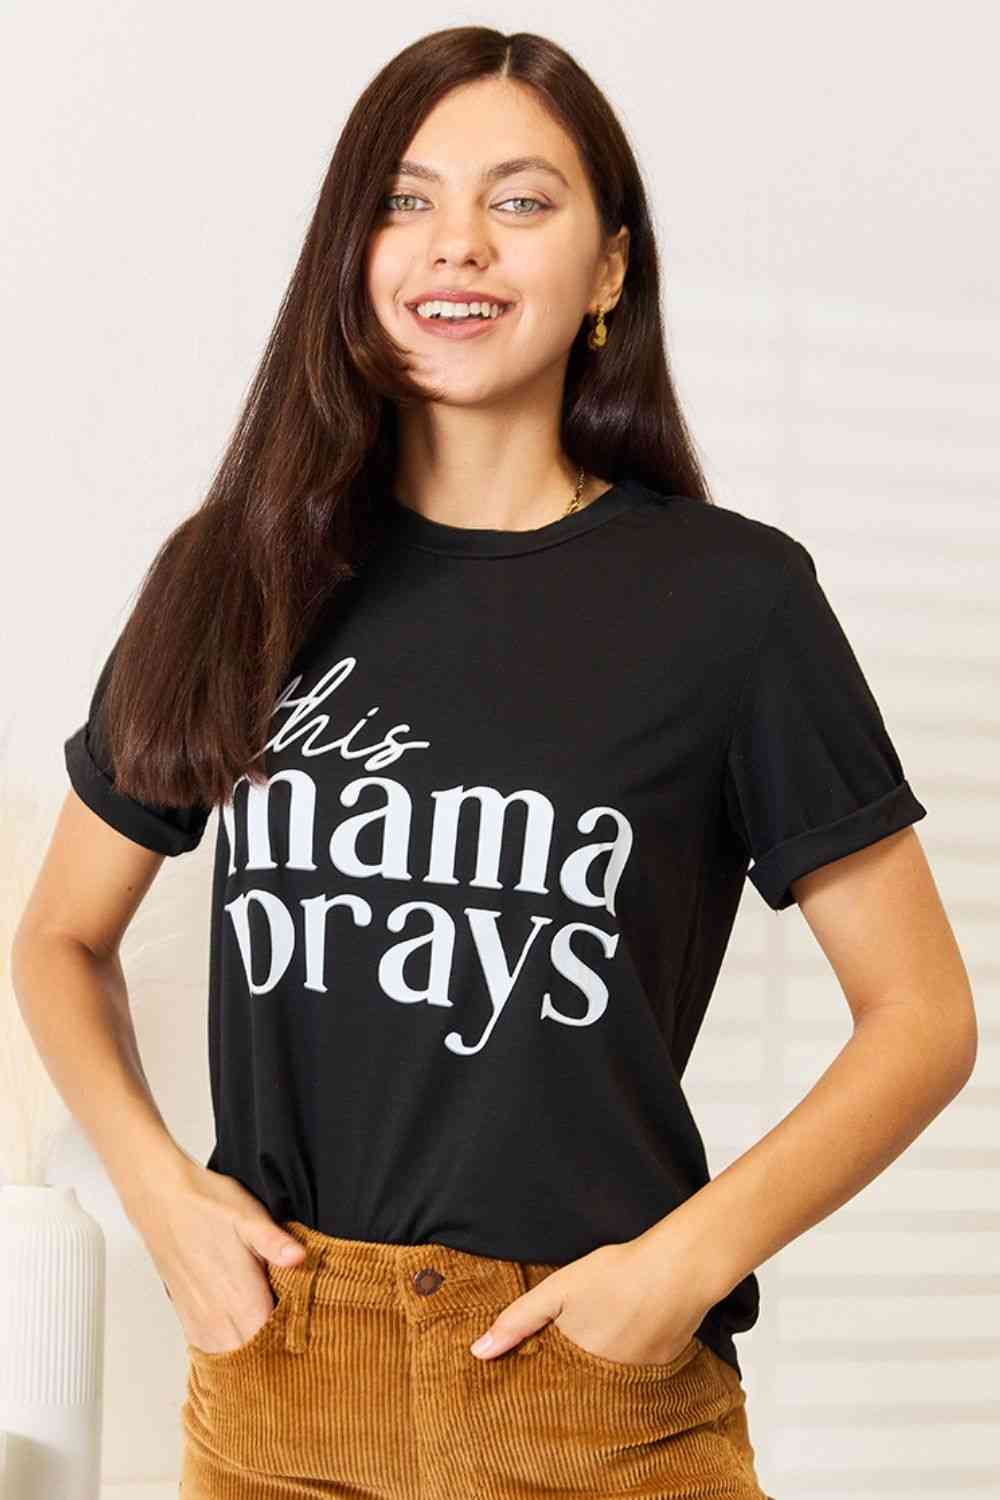 THIS MAMA PRAYS Graphic T-Shirt in Black